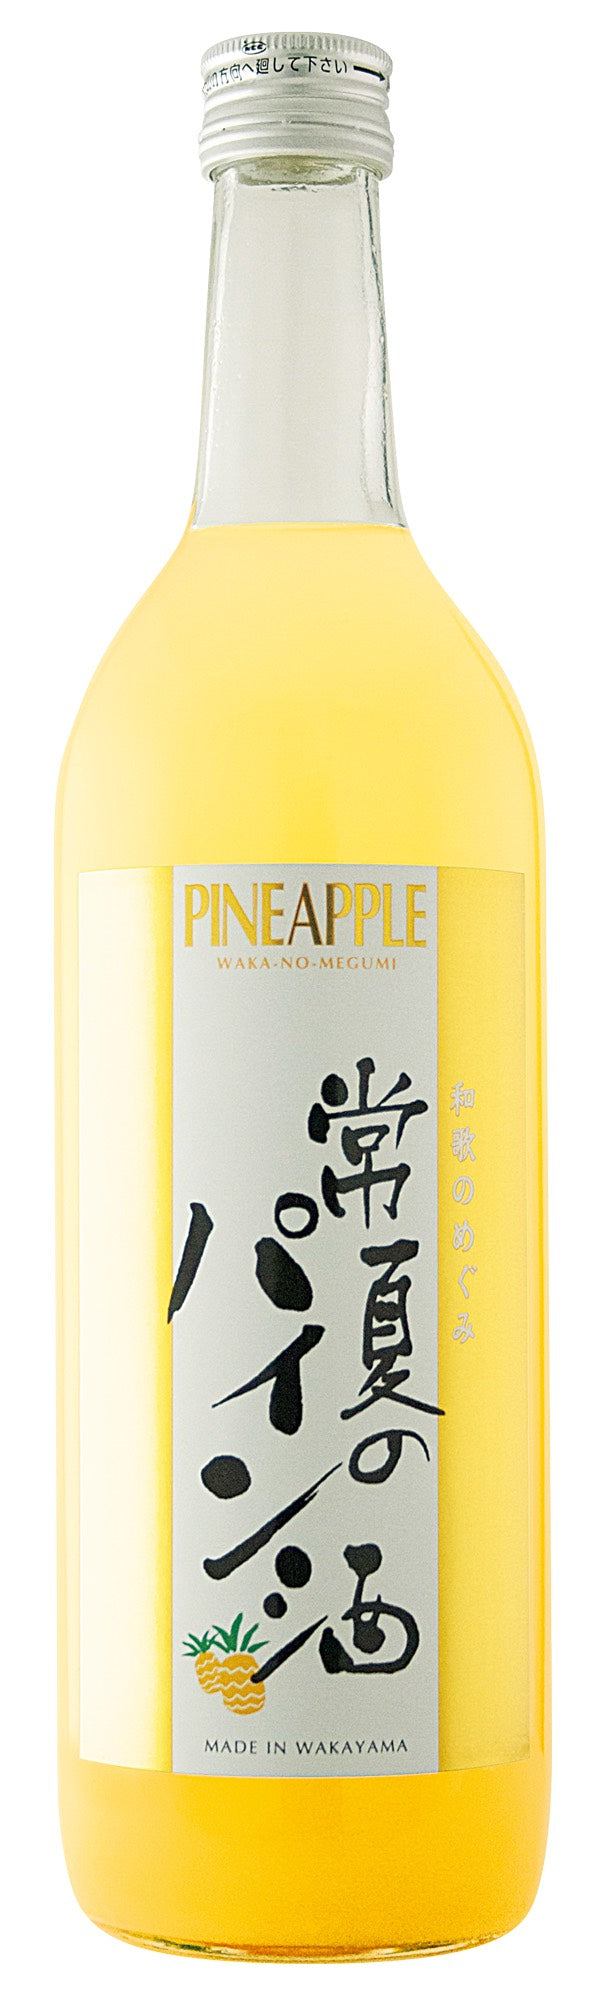 Waka No Megumi "Pineapple"